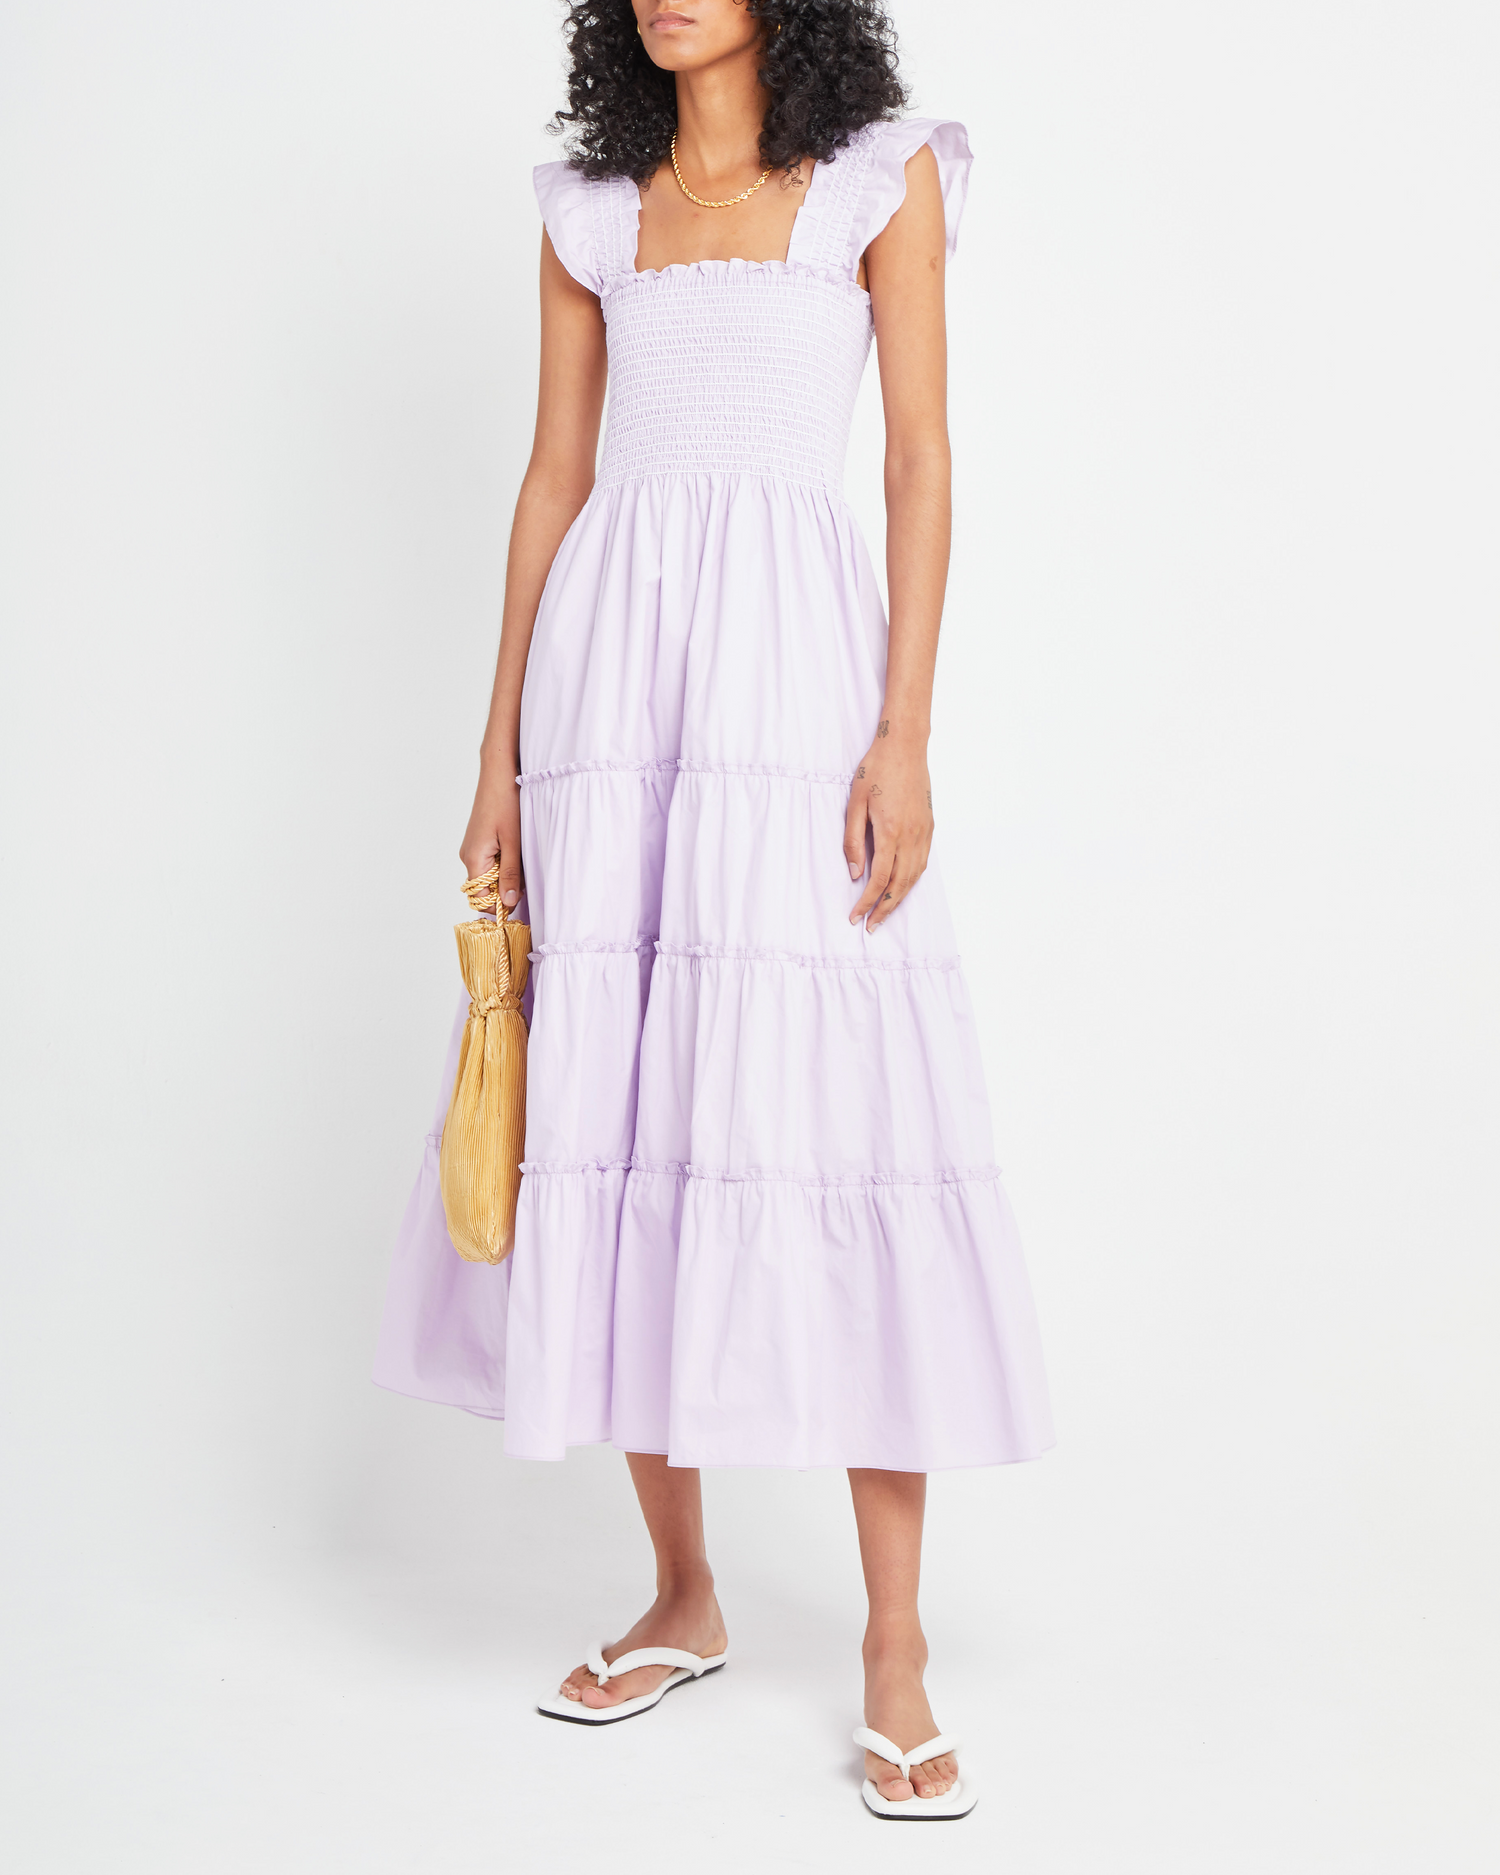 First image of Calypso Maxi Dress, a purple maxi dress, ruffle cap sleeves, smocked bodice